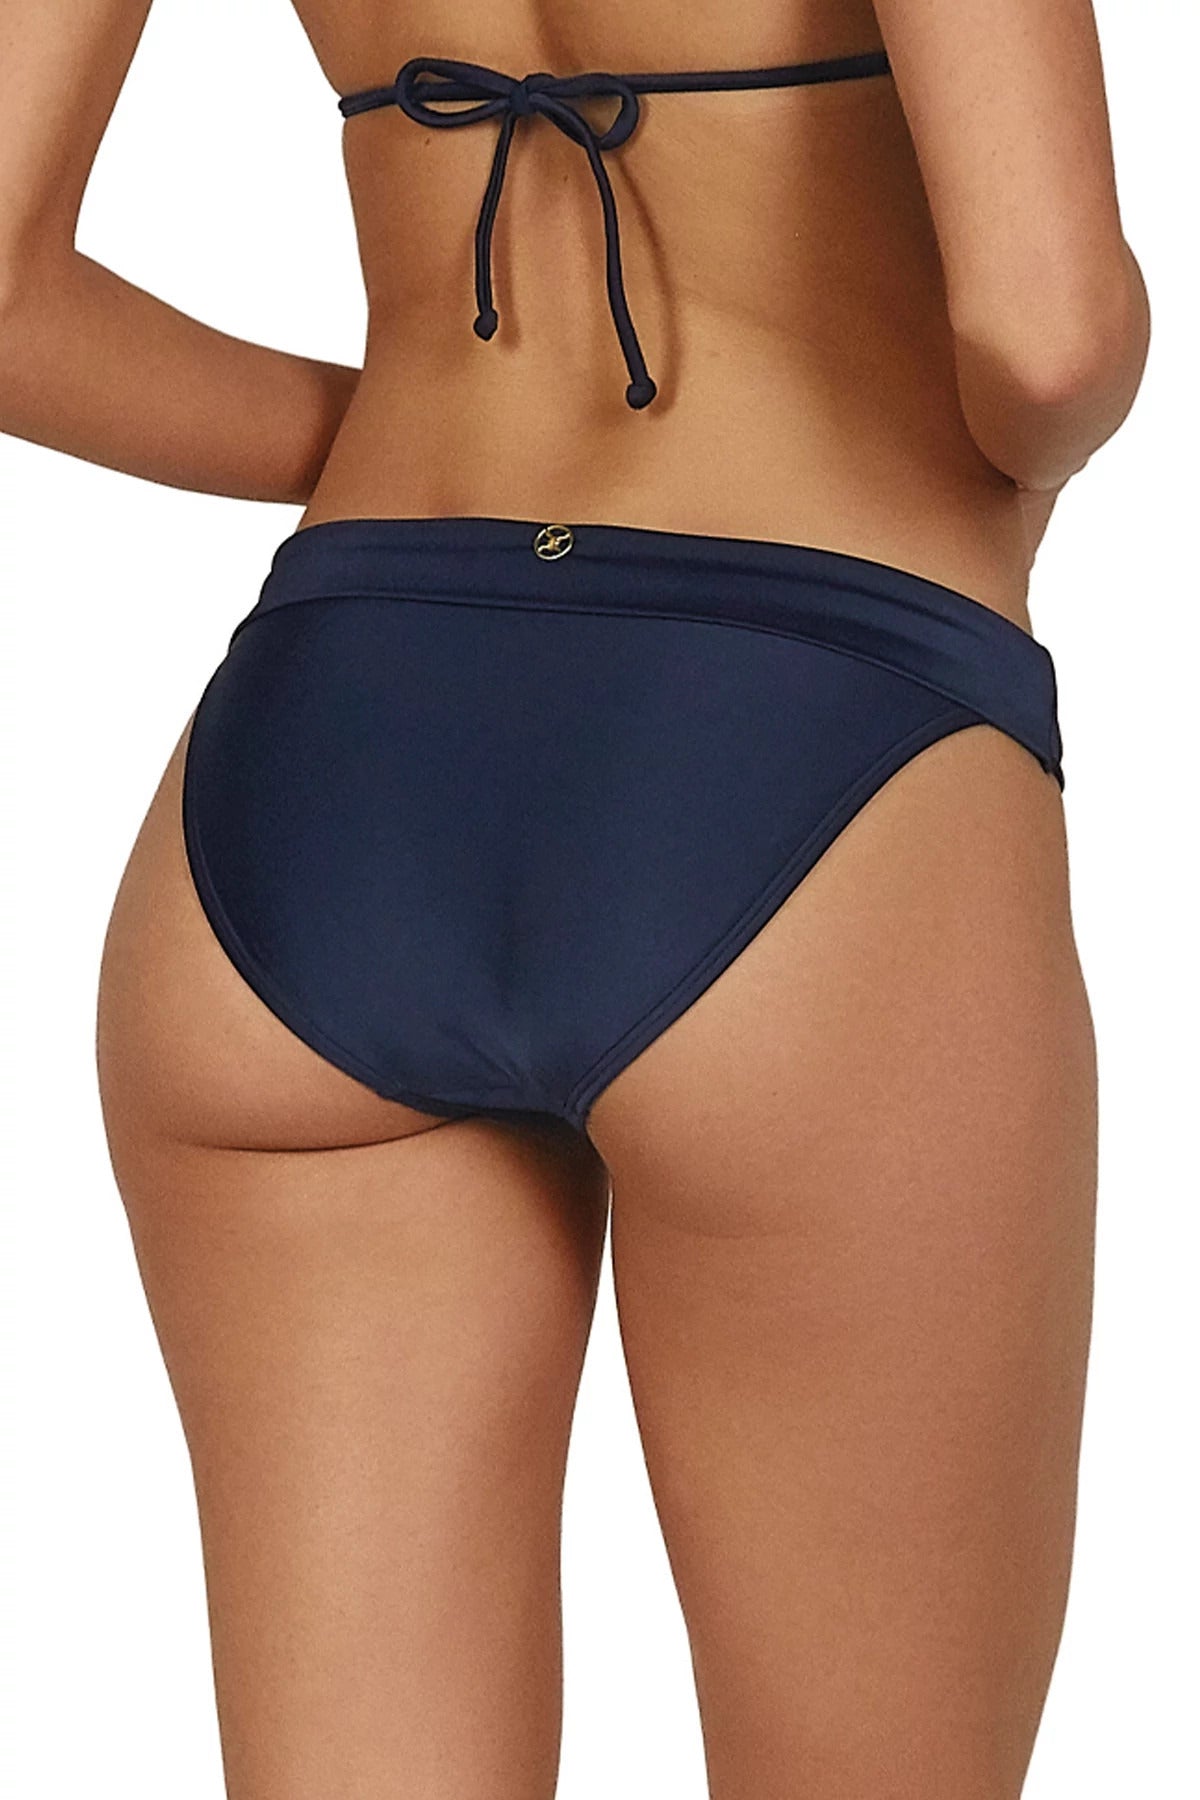 Vix Swimwear Women's Bia Tab Side Hipster Bikini Bottom - Navy